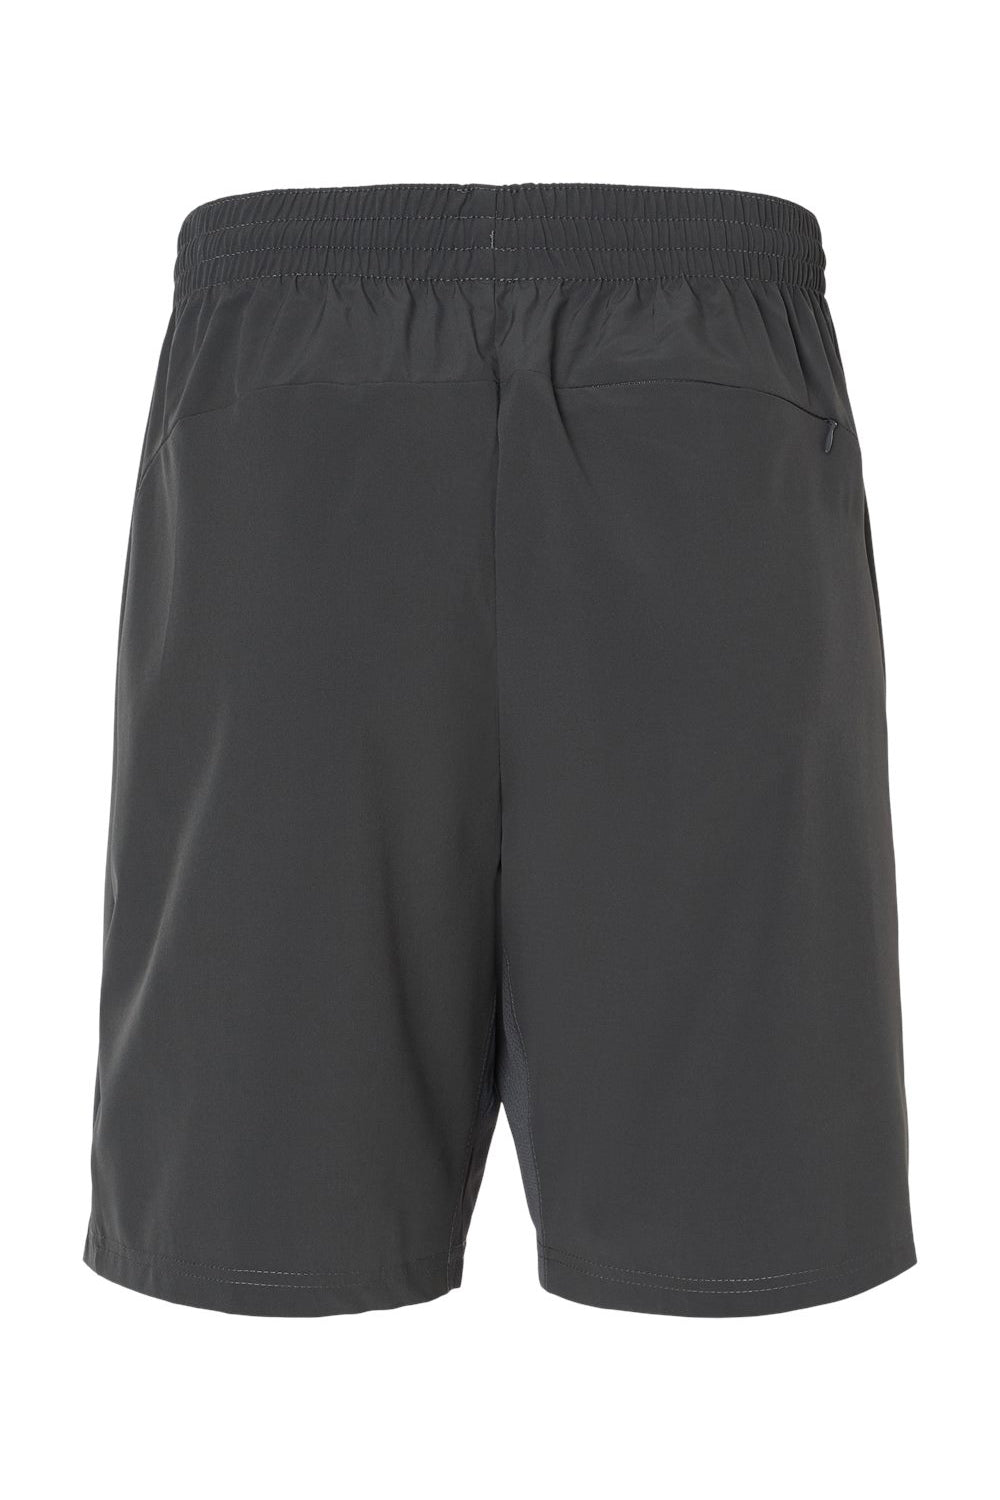 Holloway 229556 Mens Weld Shorts w/ Pockets Carbon Grey Flat Back